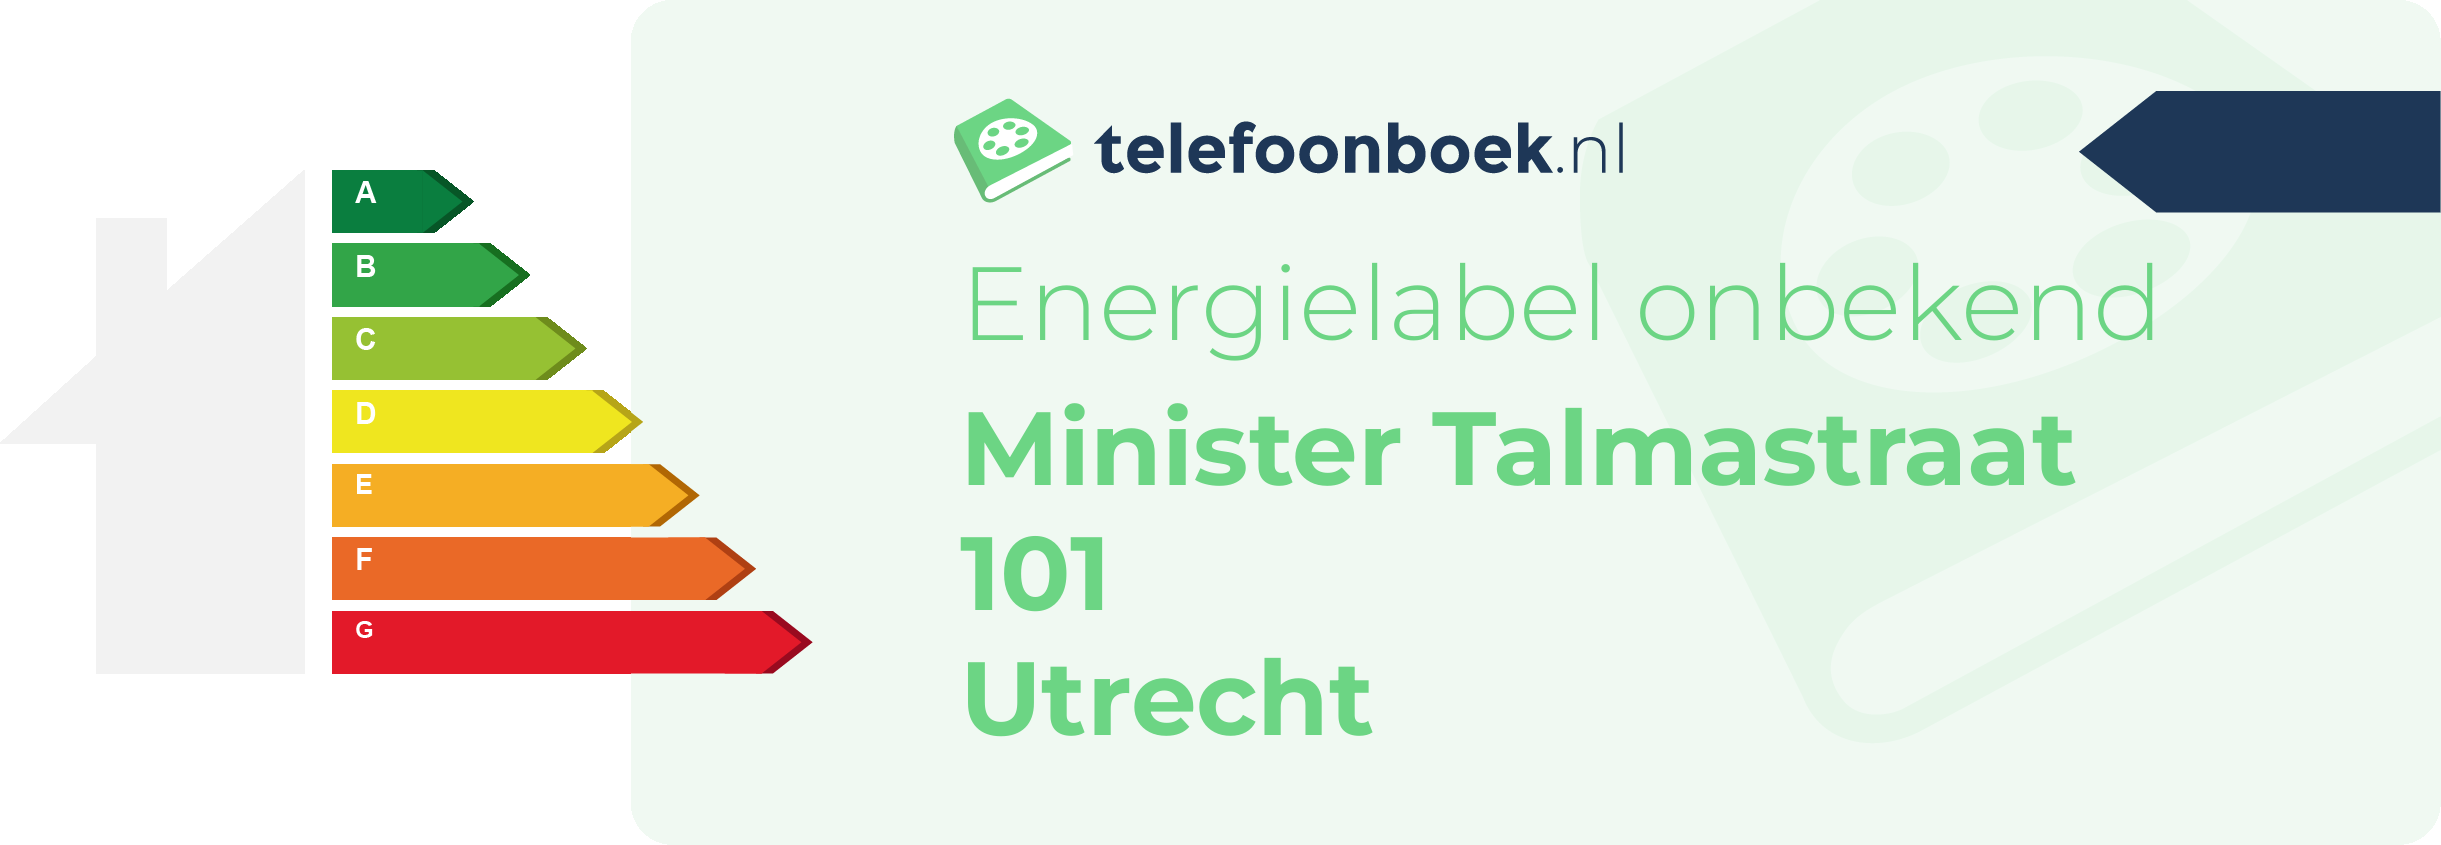 Energielabel Minister Talmastraat 101 Utrecht